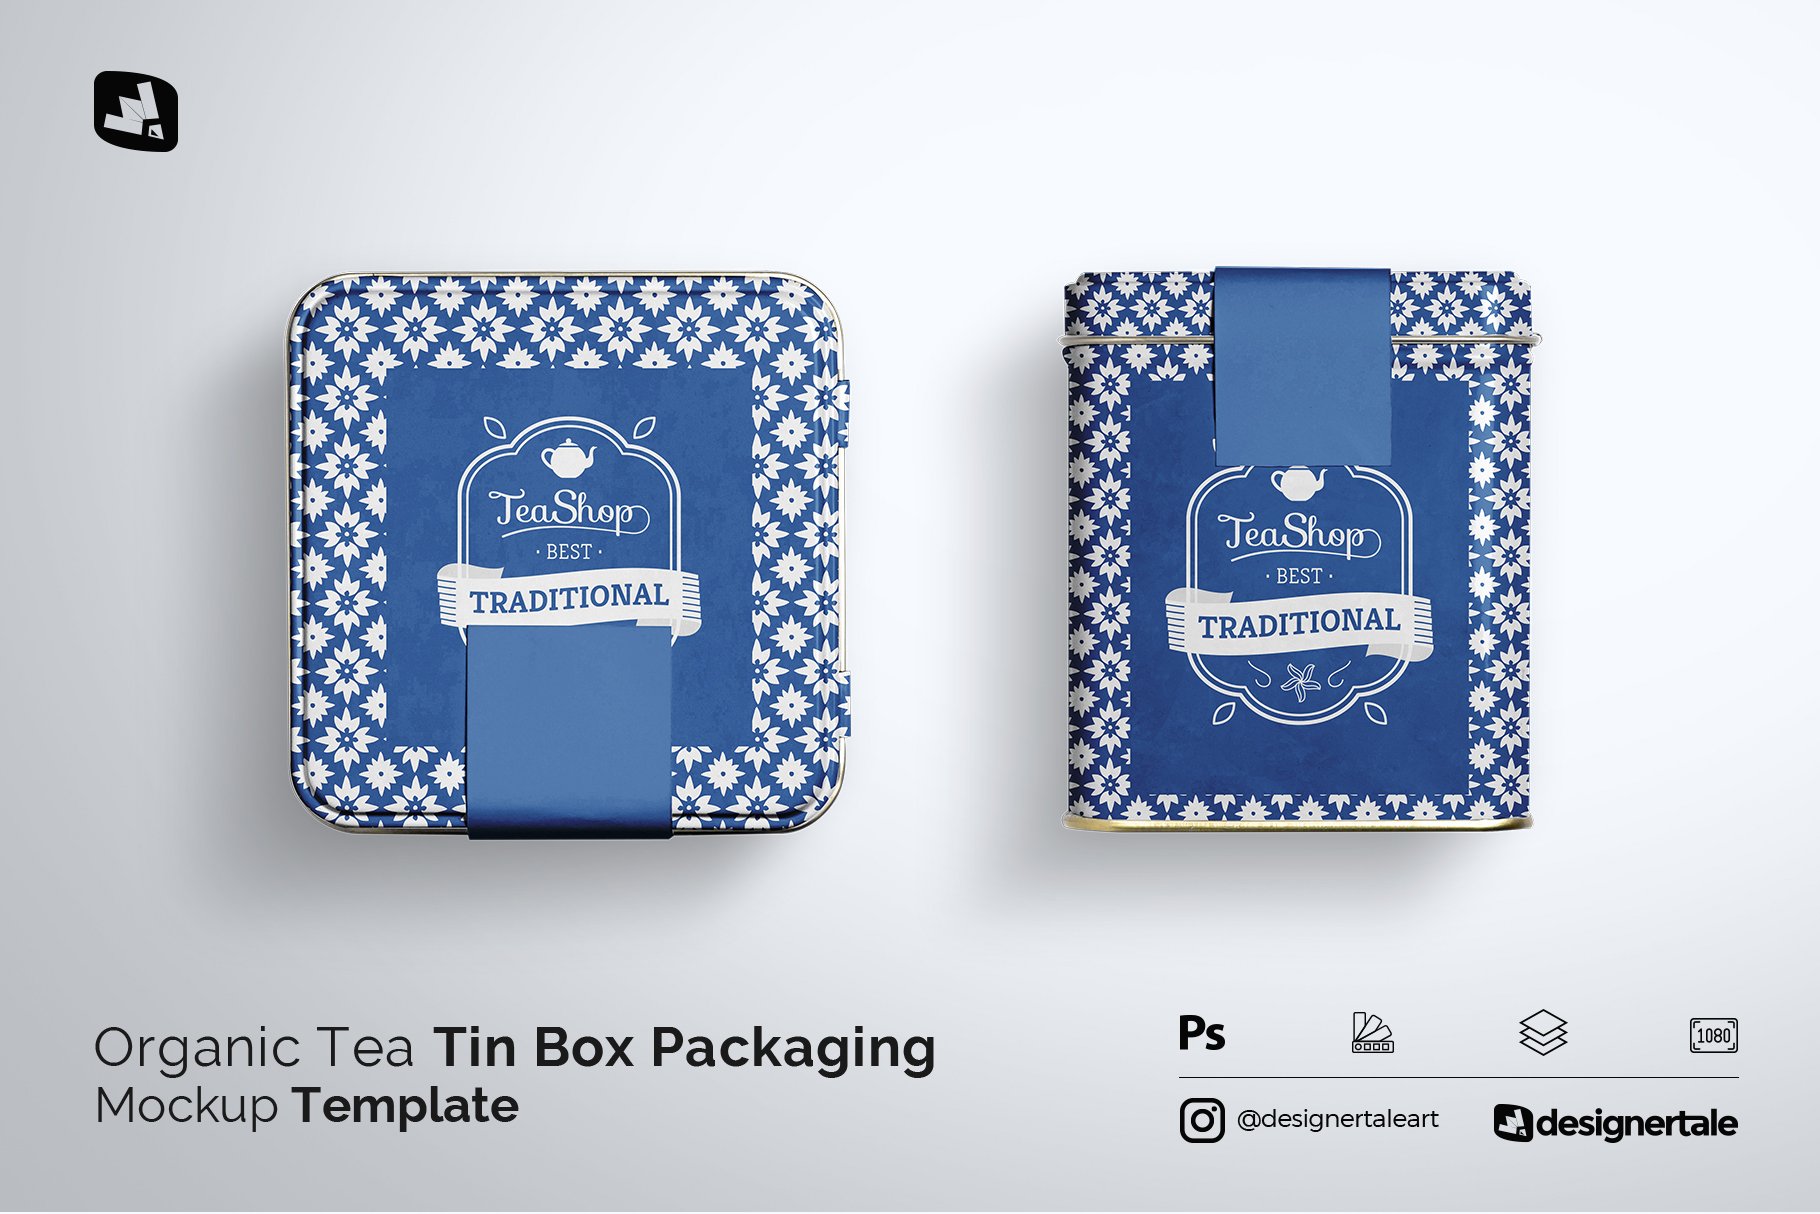 Organic Tea Tin Box Packaging Mockup cover image.